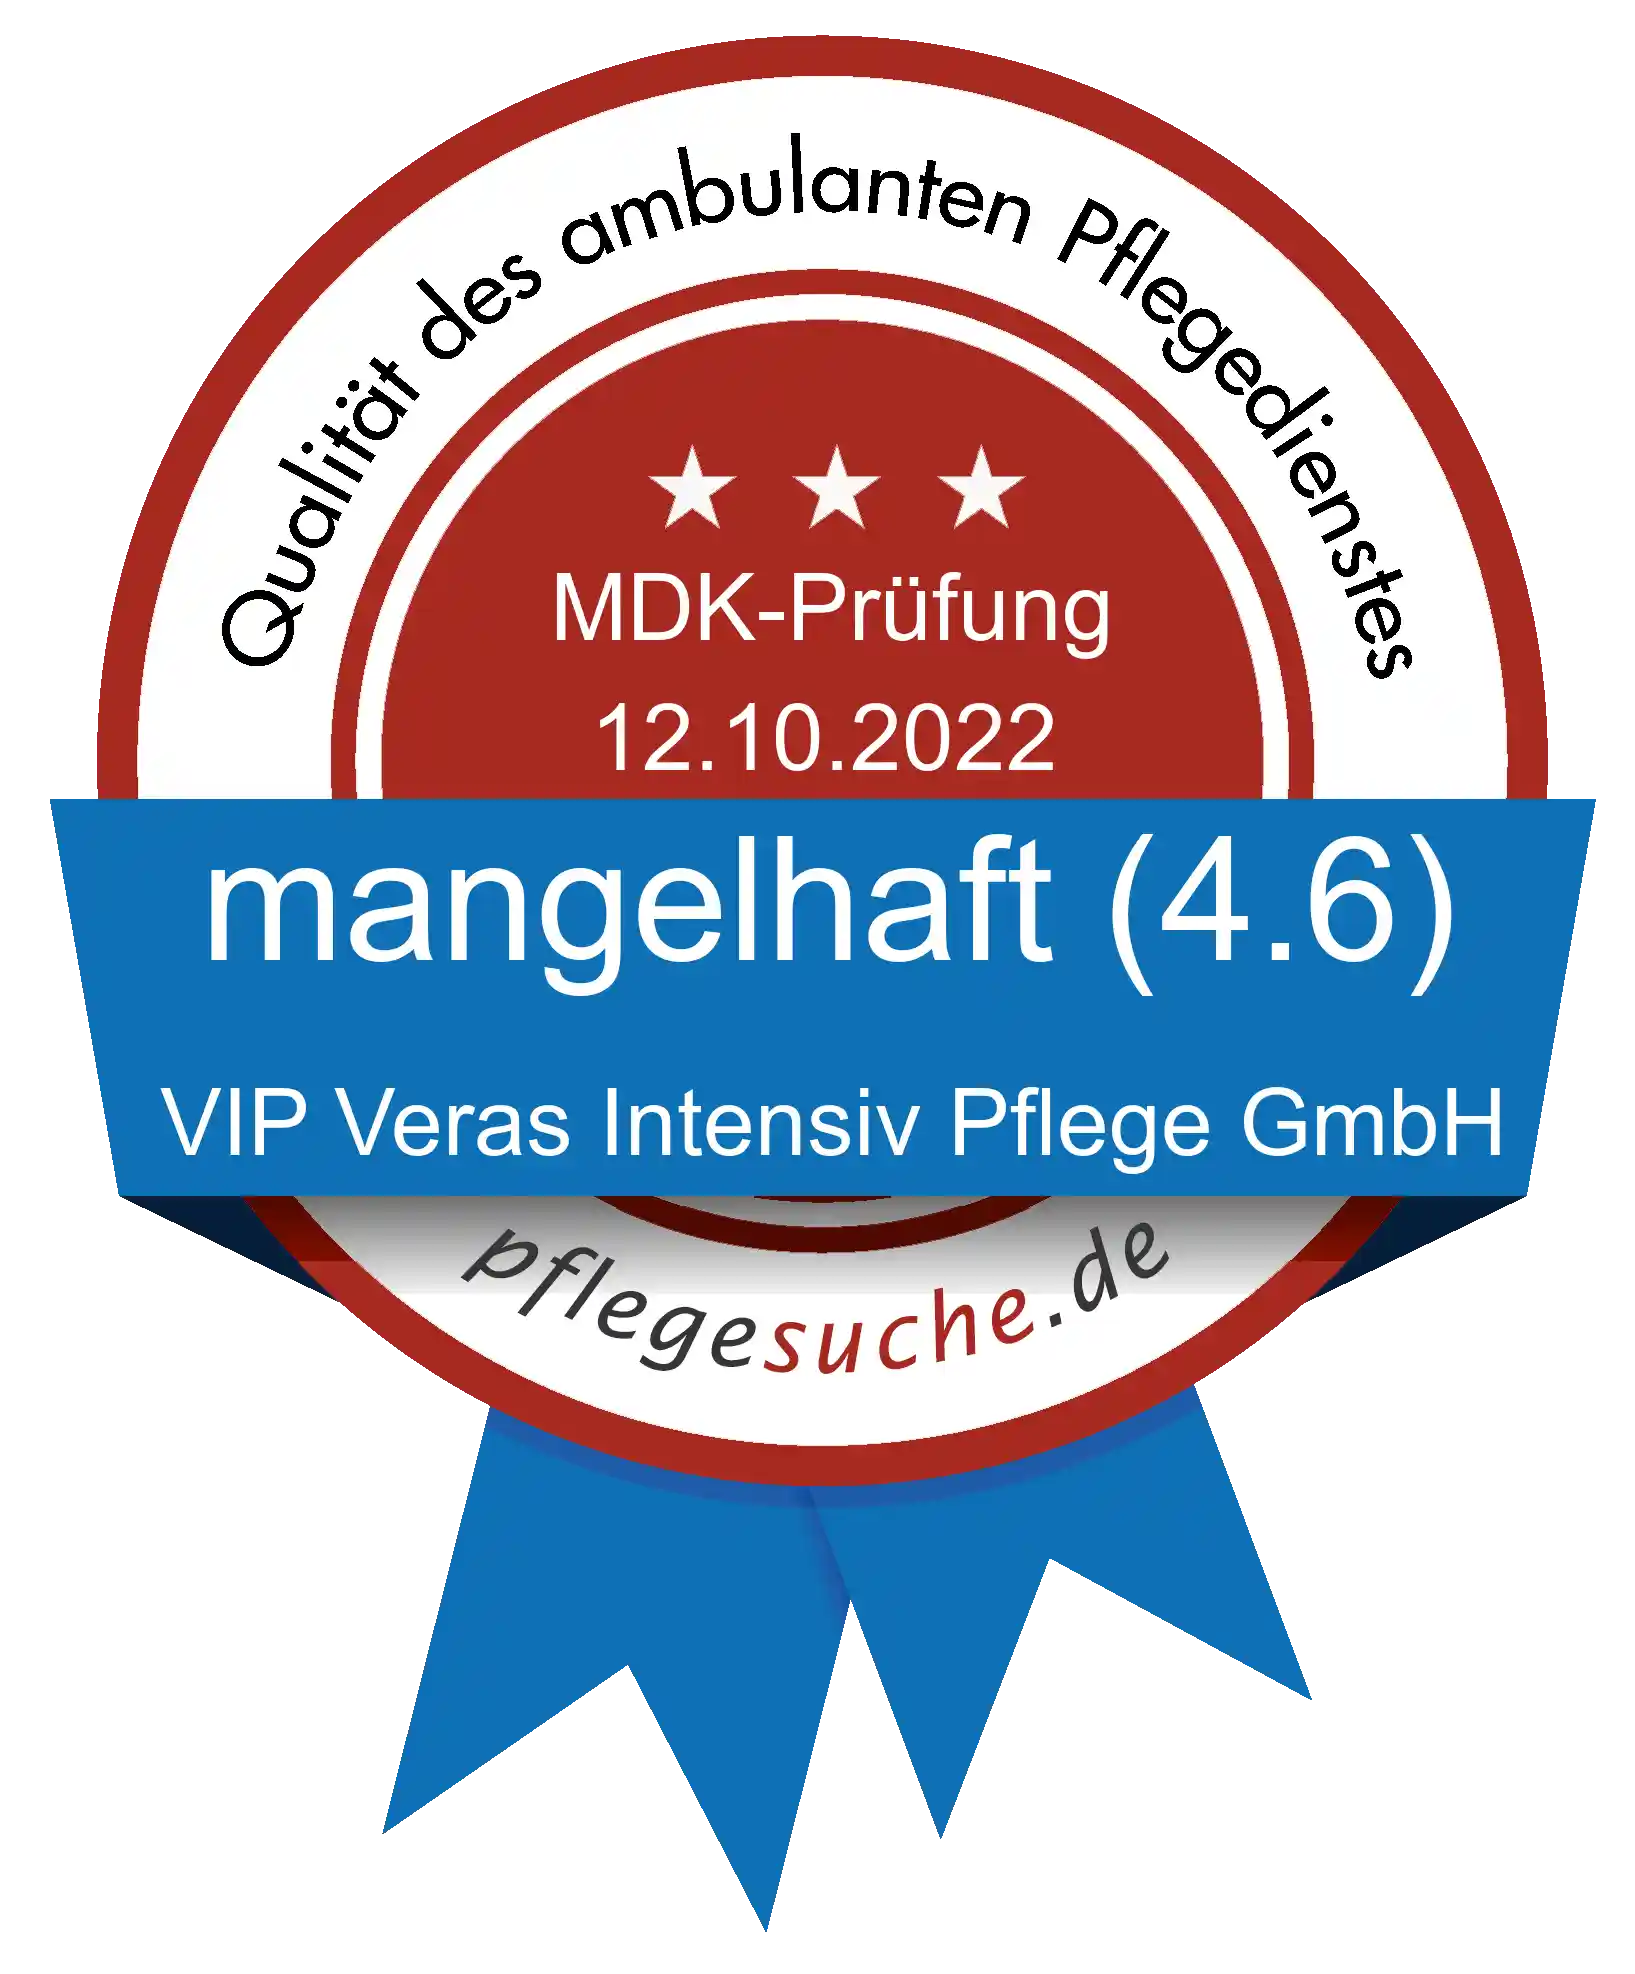 Siegel Benotung VIP Veras Intensiv Pflege GmbH